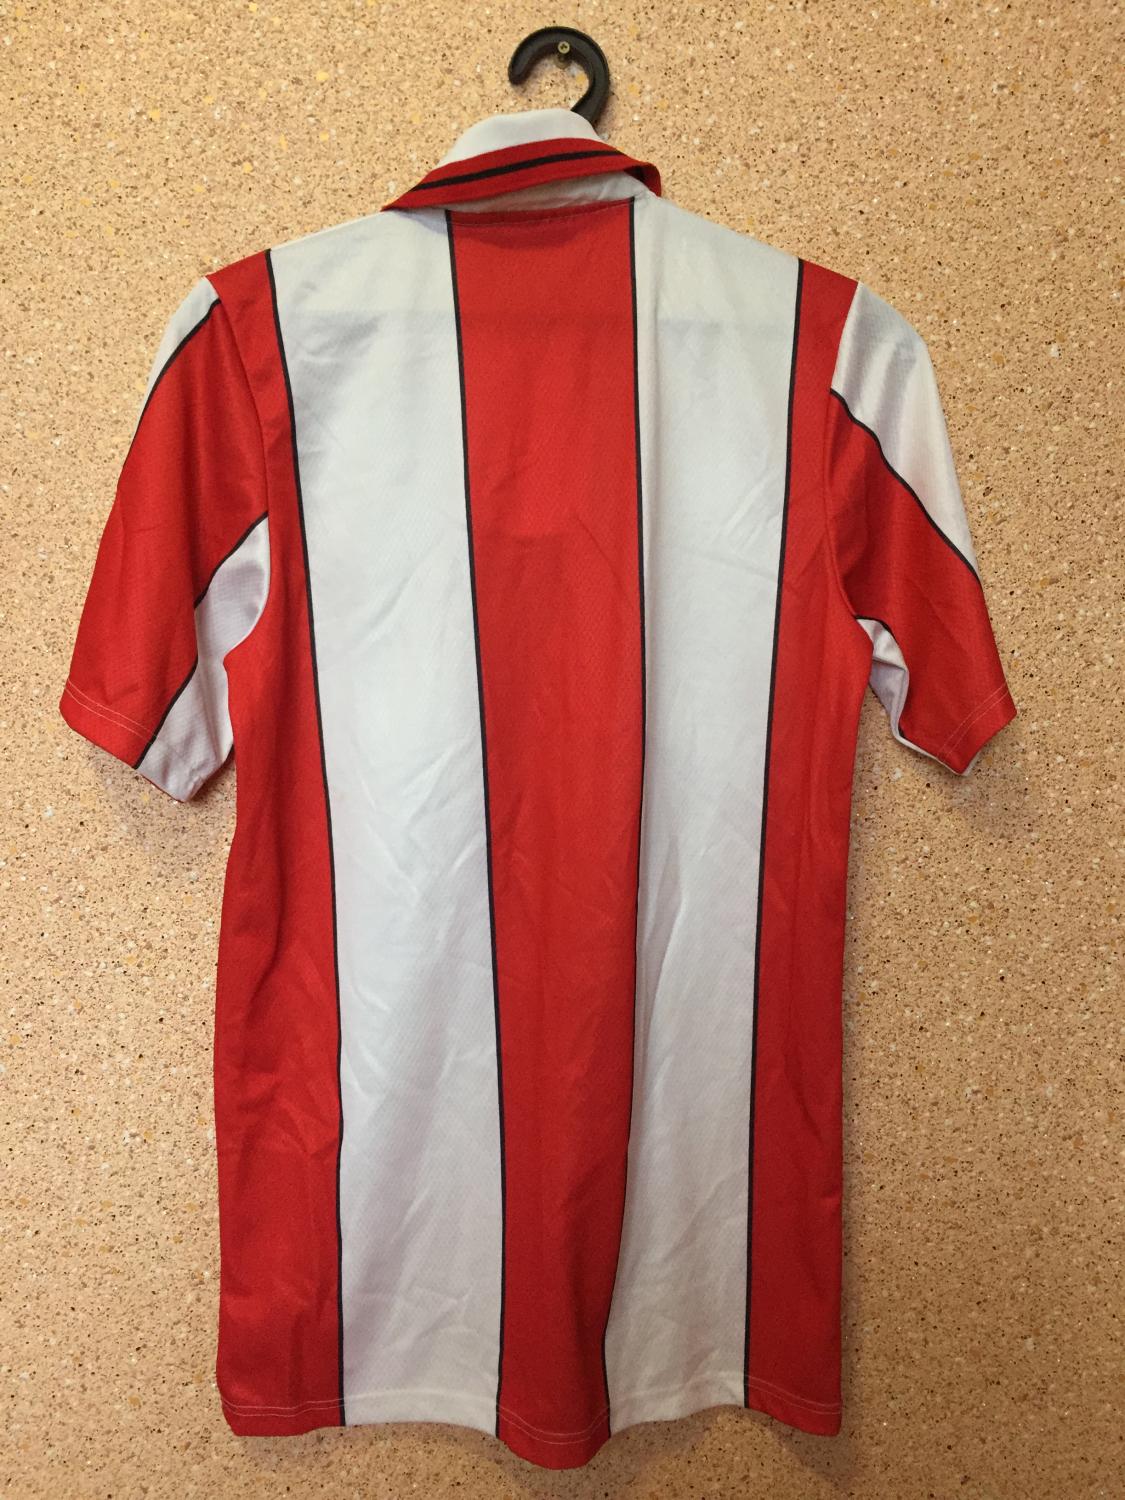 Stoke Home football shirt 1995 - 1996. Added on 2014-06-15, 22:011125 x 1500